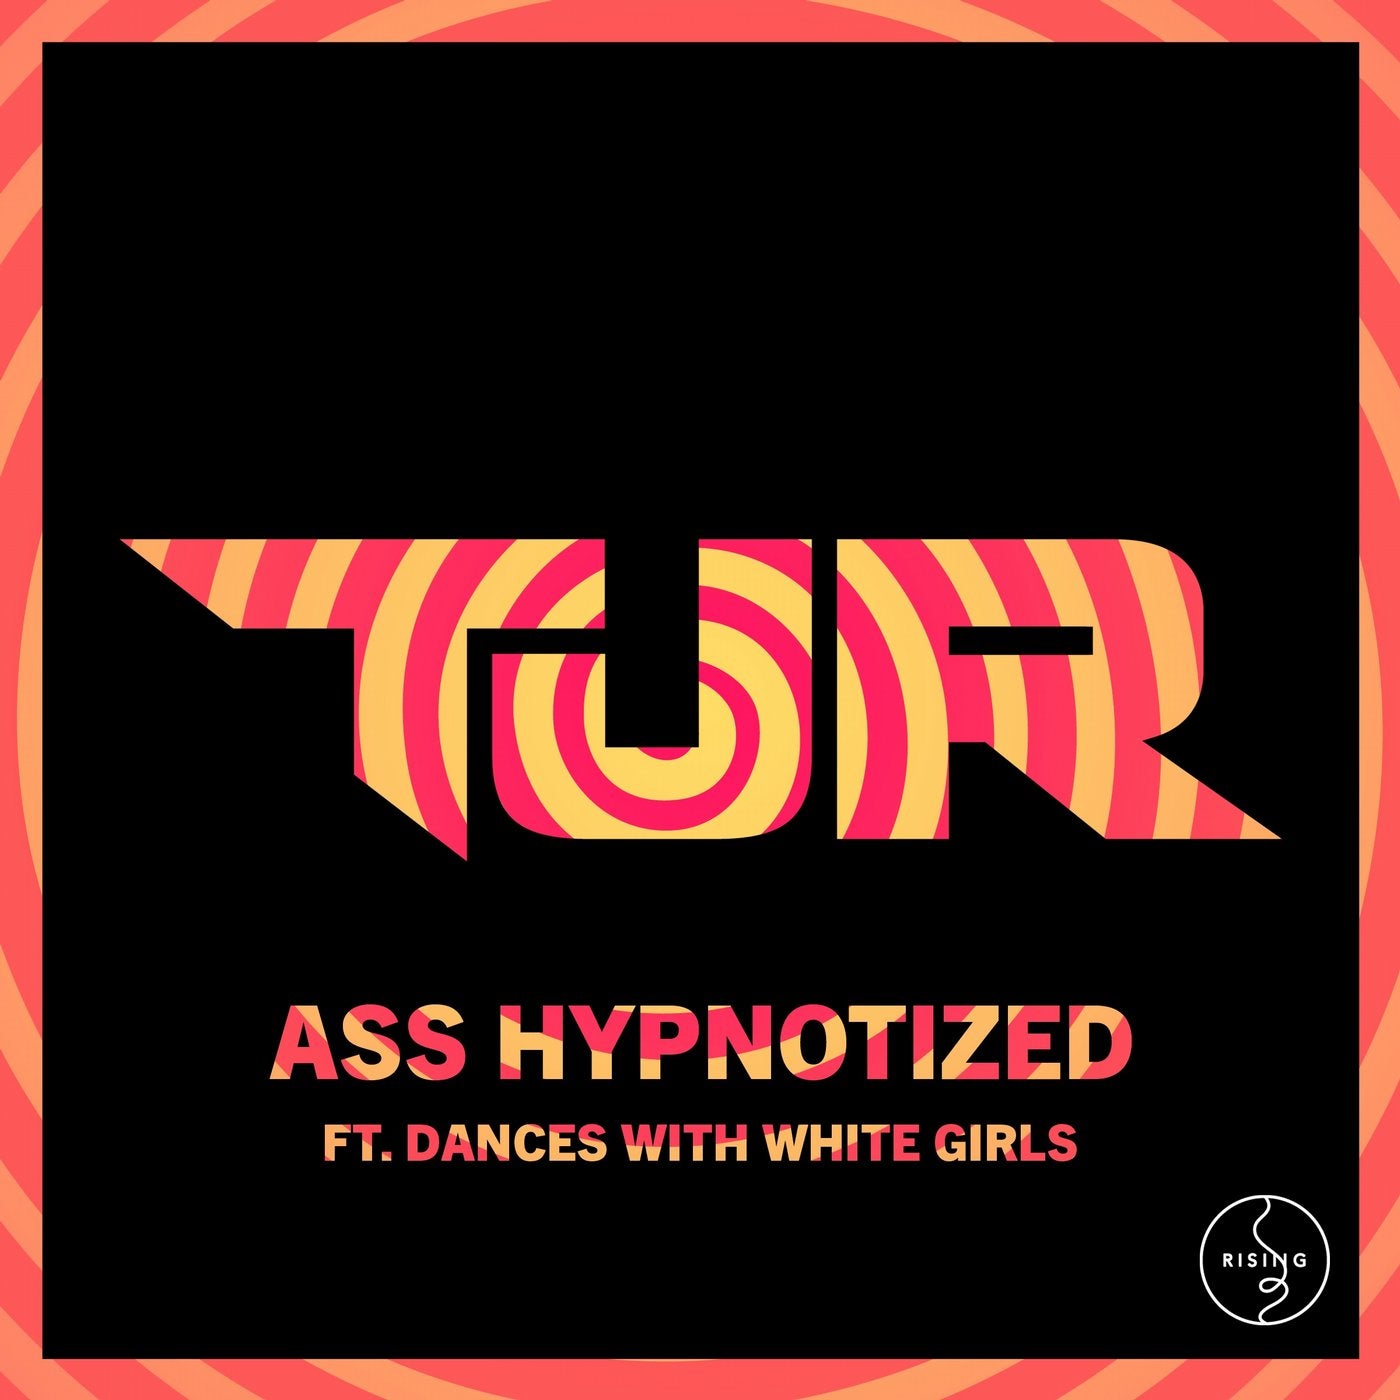 Hypnotizing ass